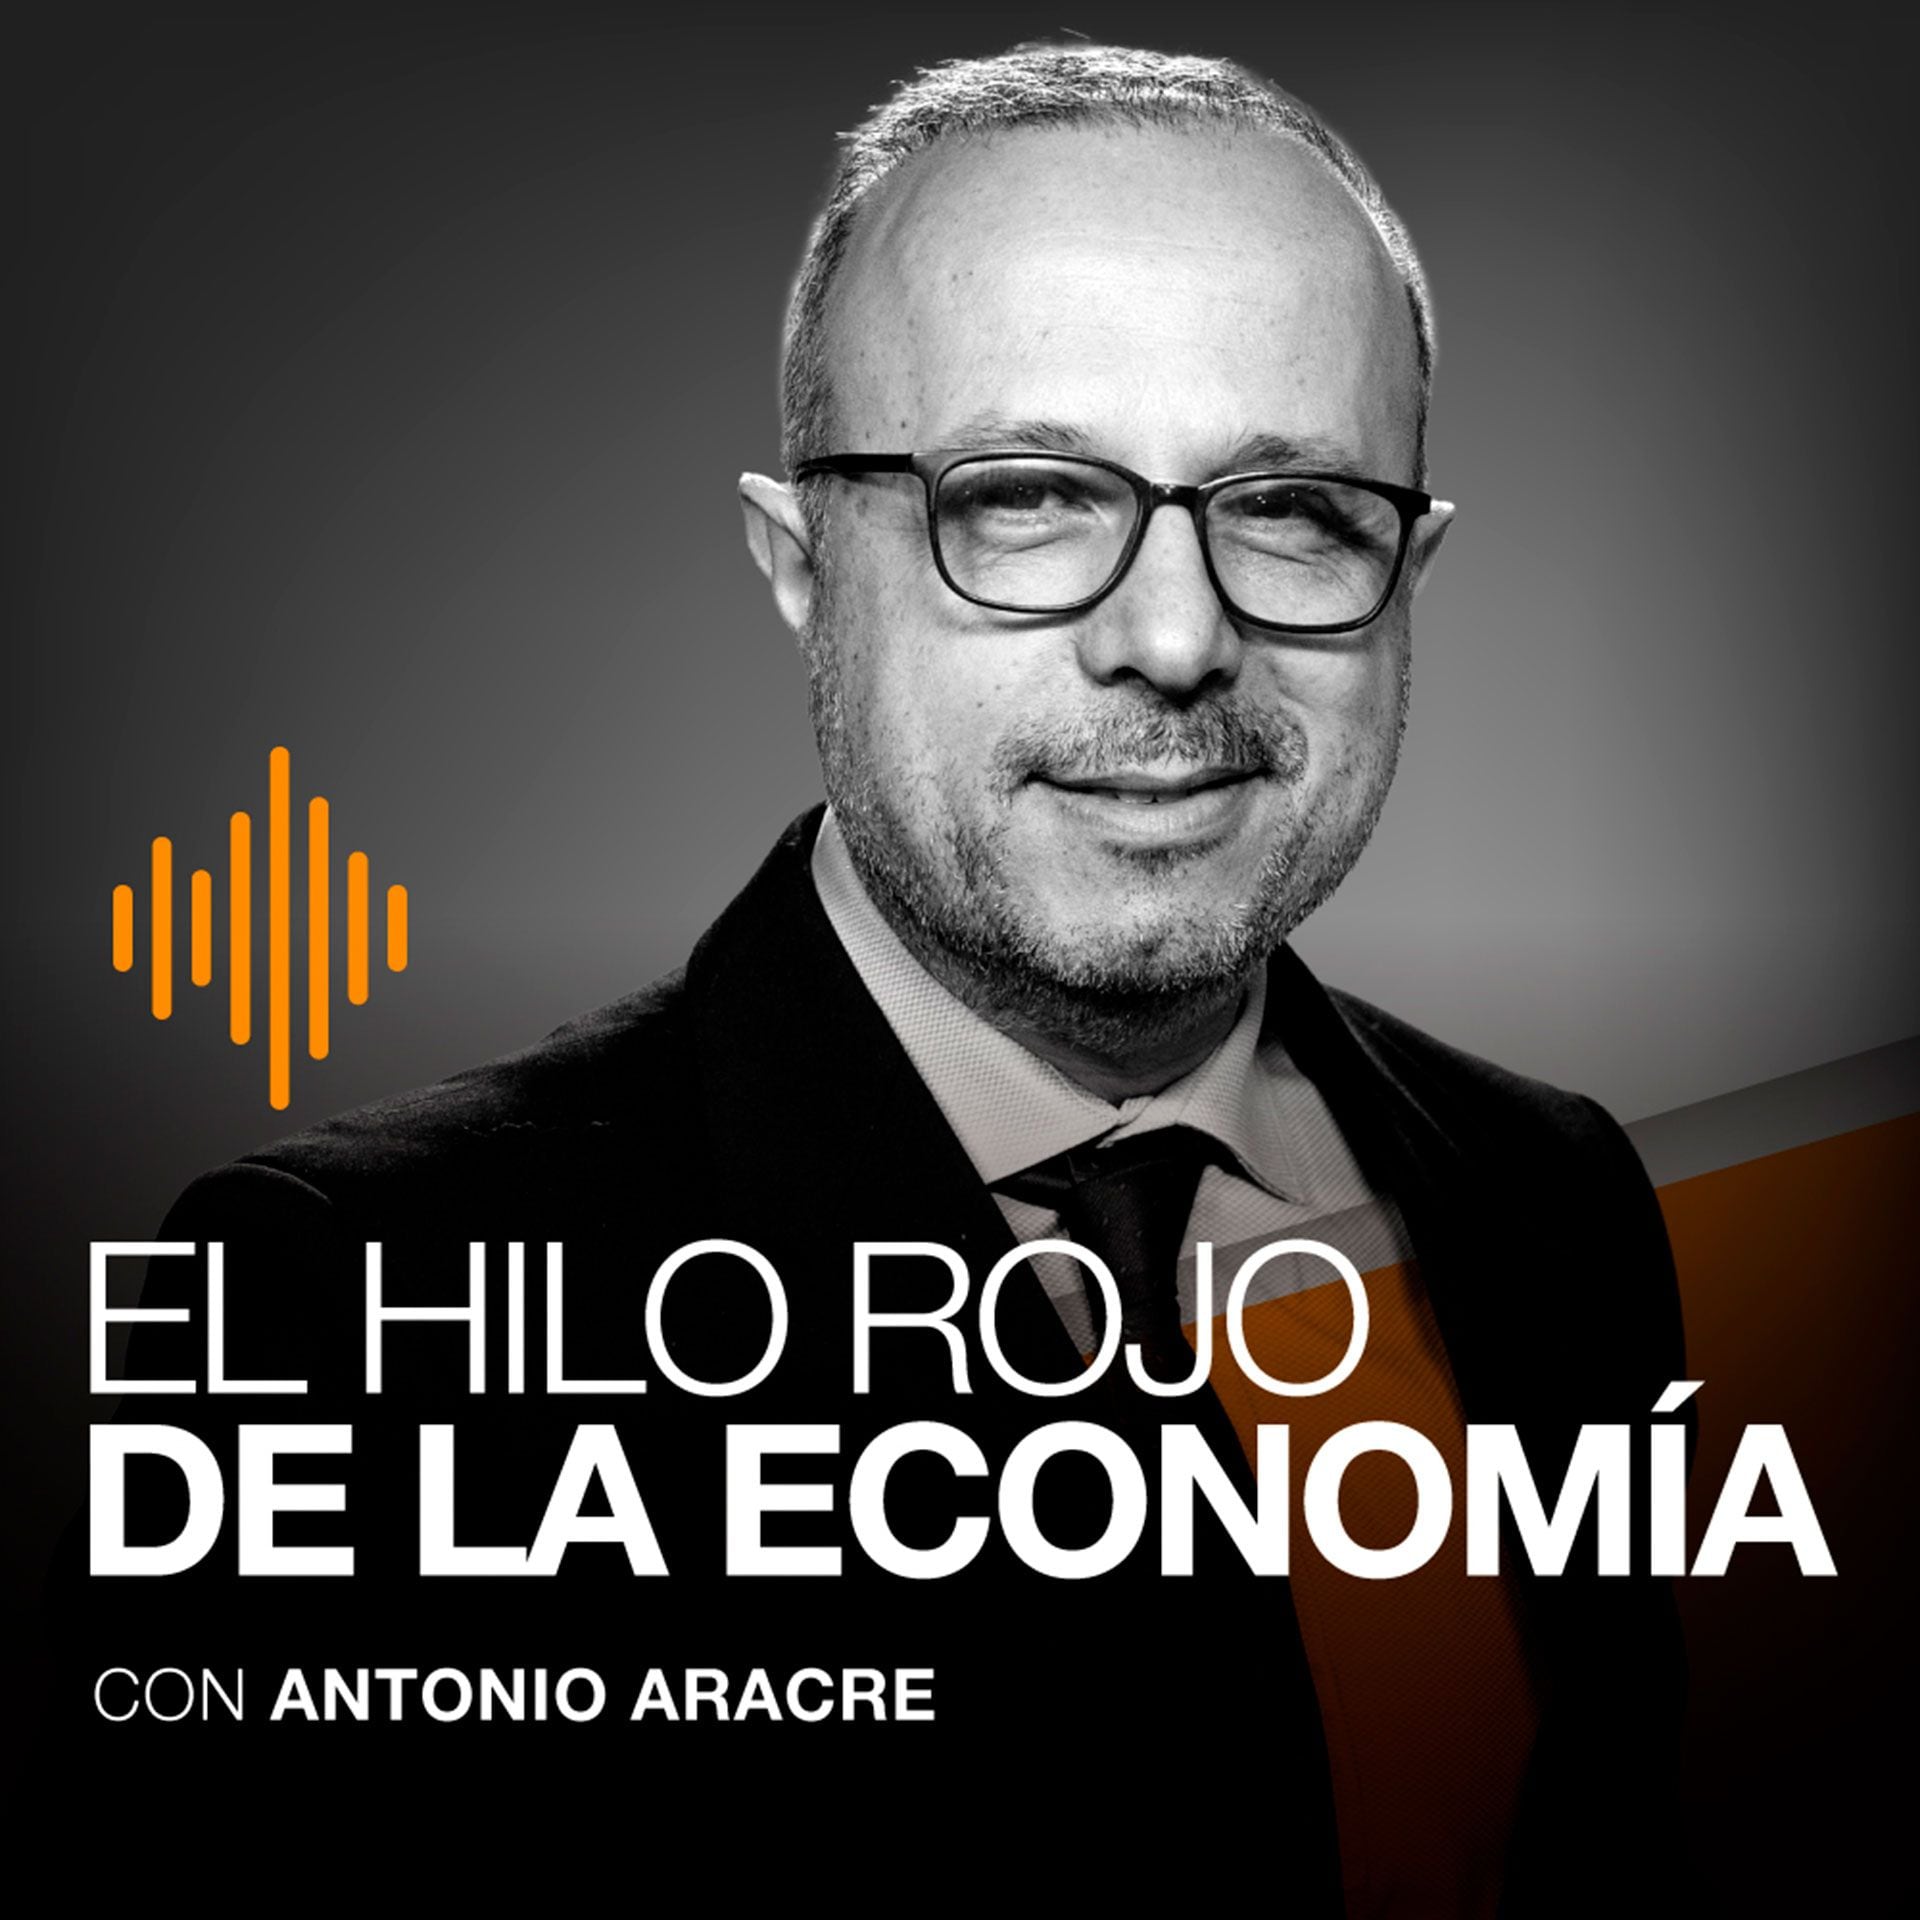 El hilo rojo de la economía - Antonio Aracre